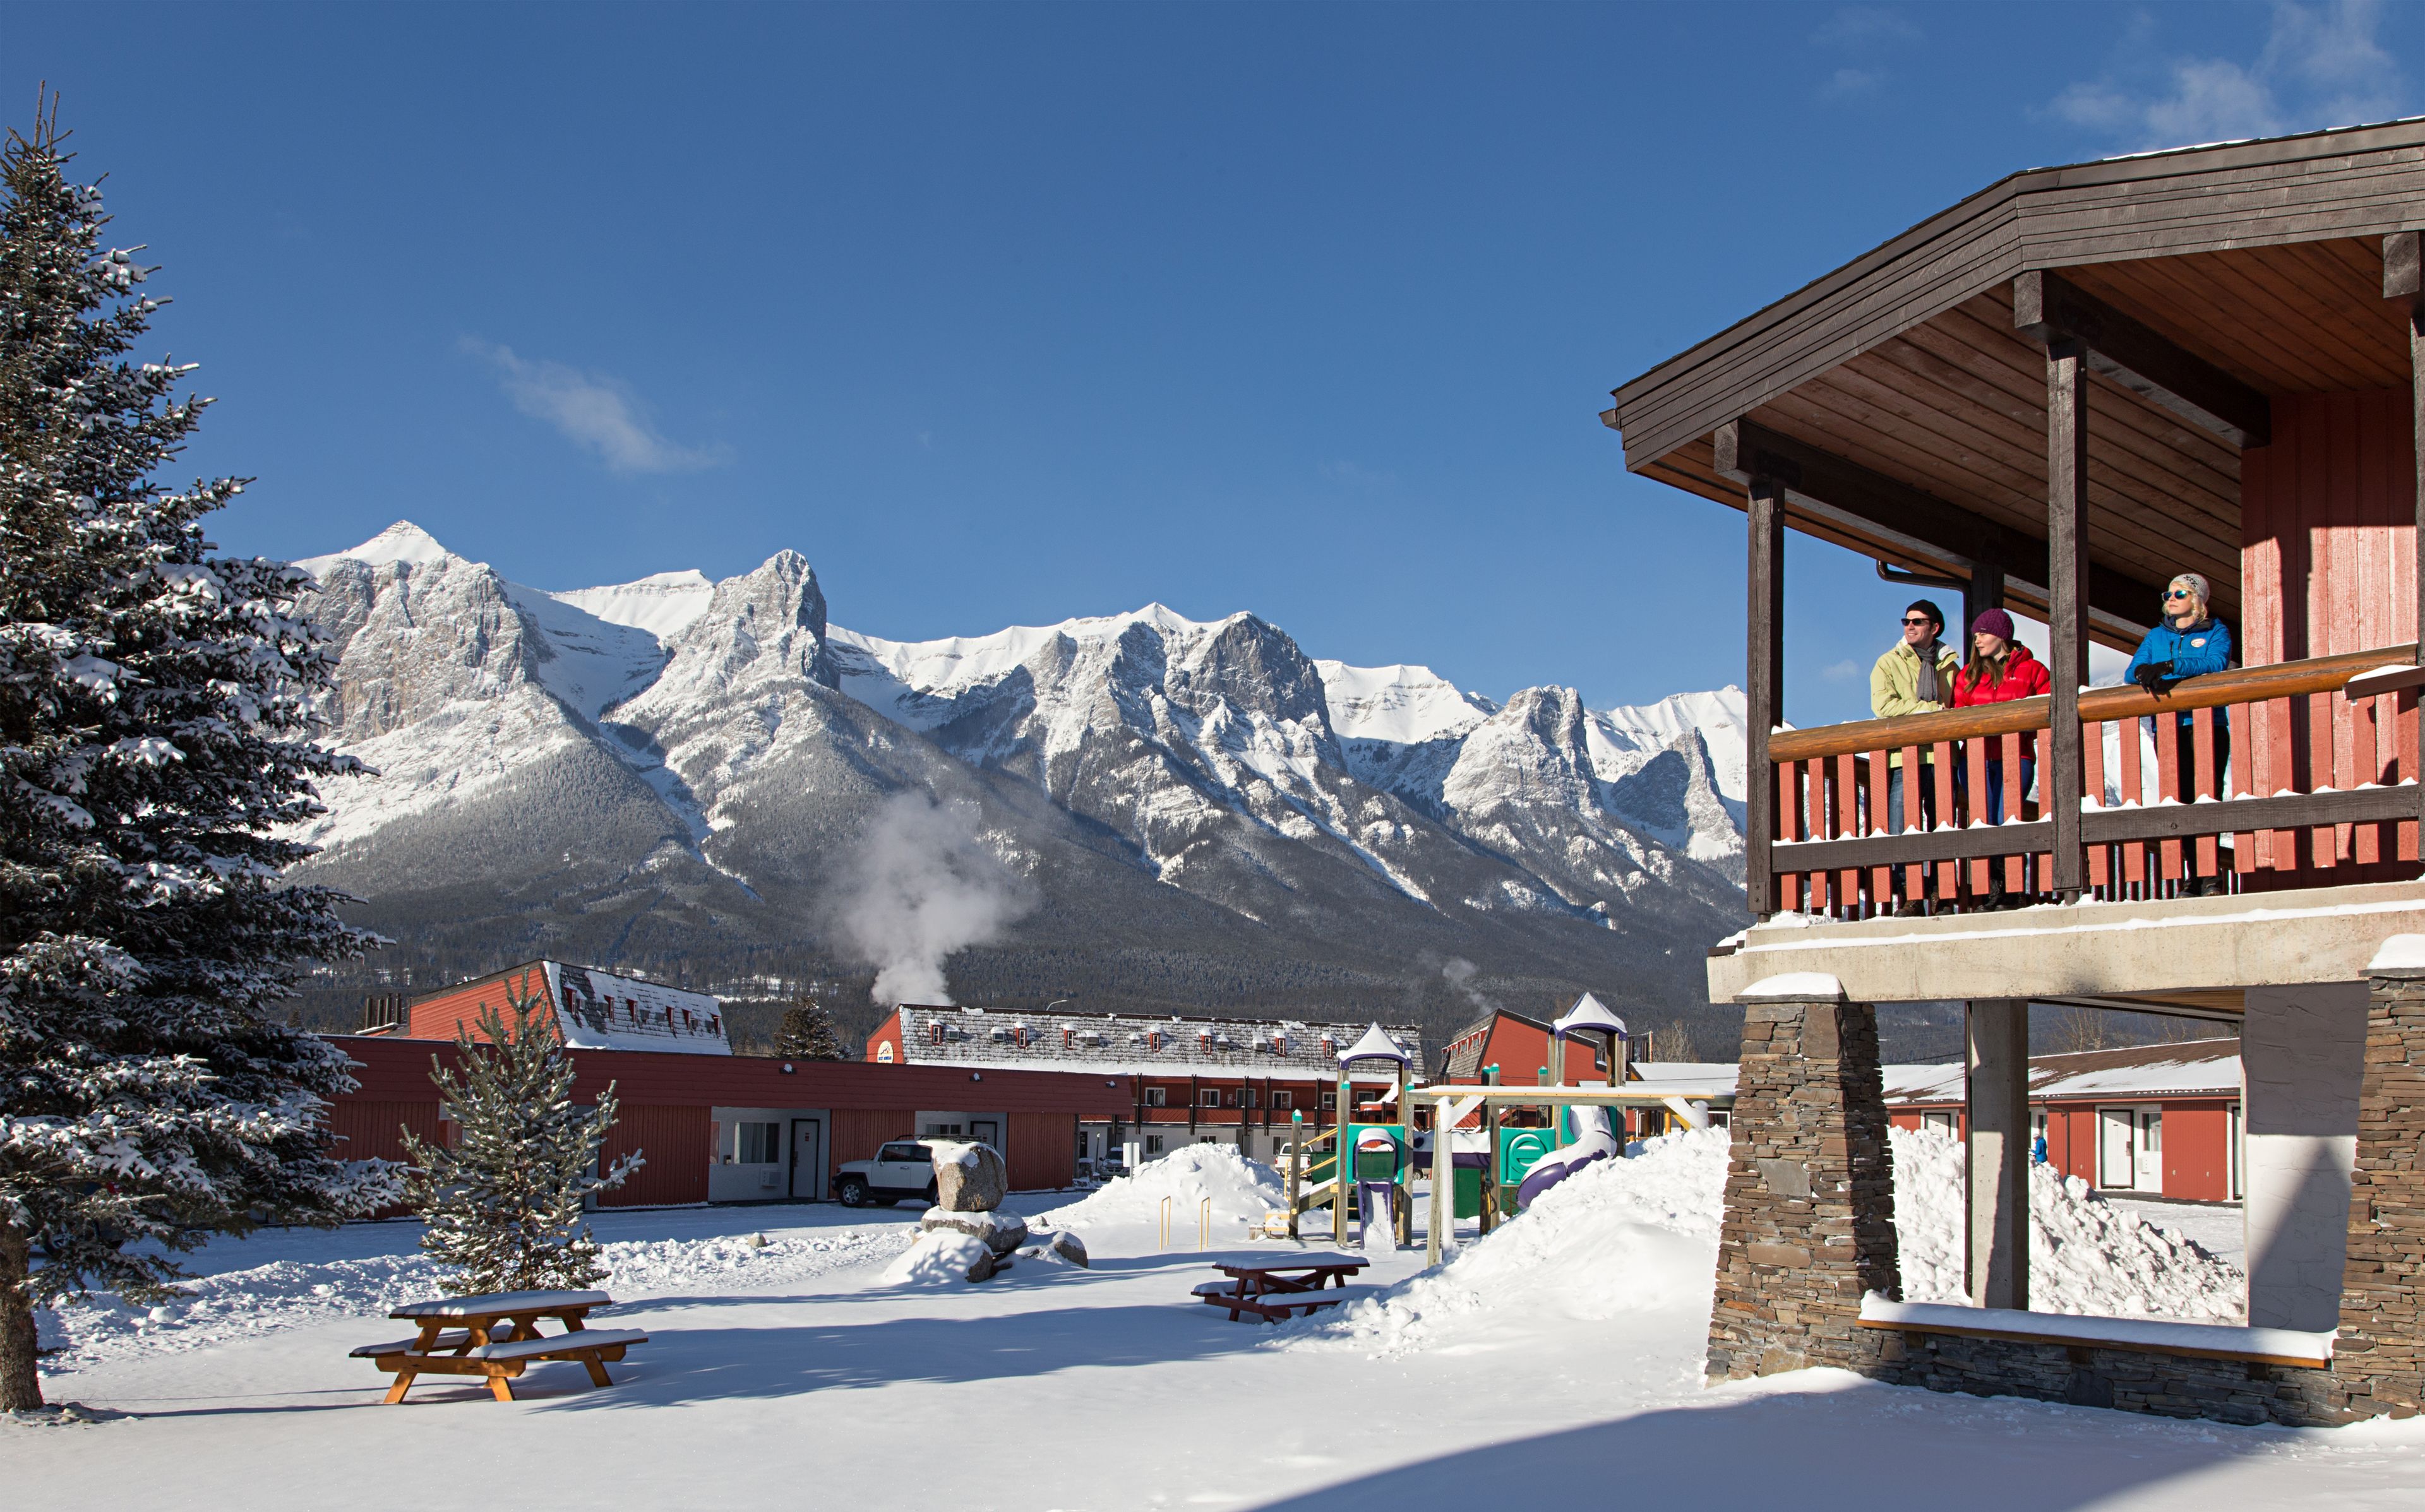 Rocky Mountain Ski Lodge image 1